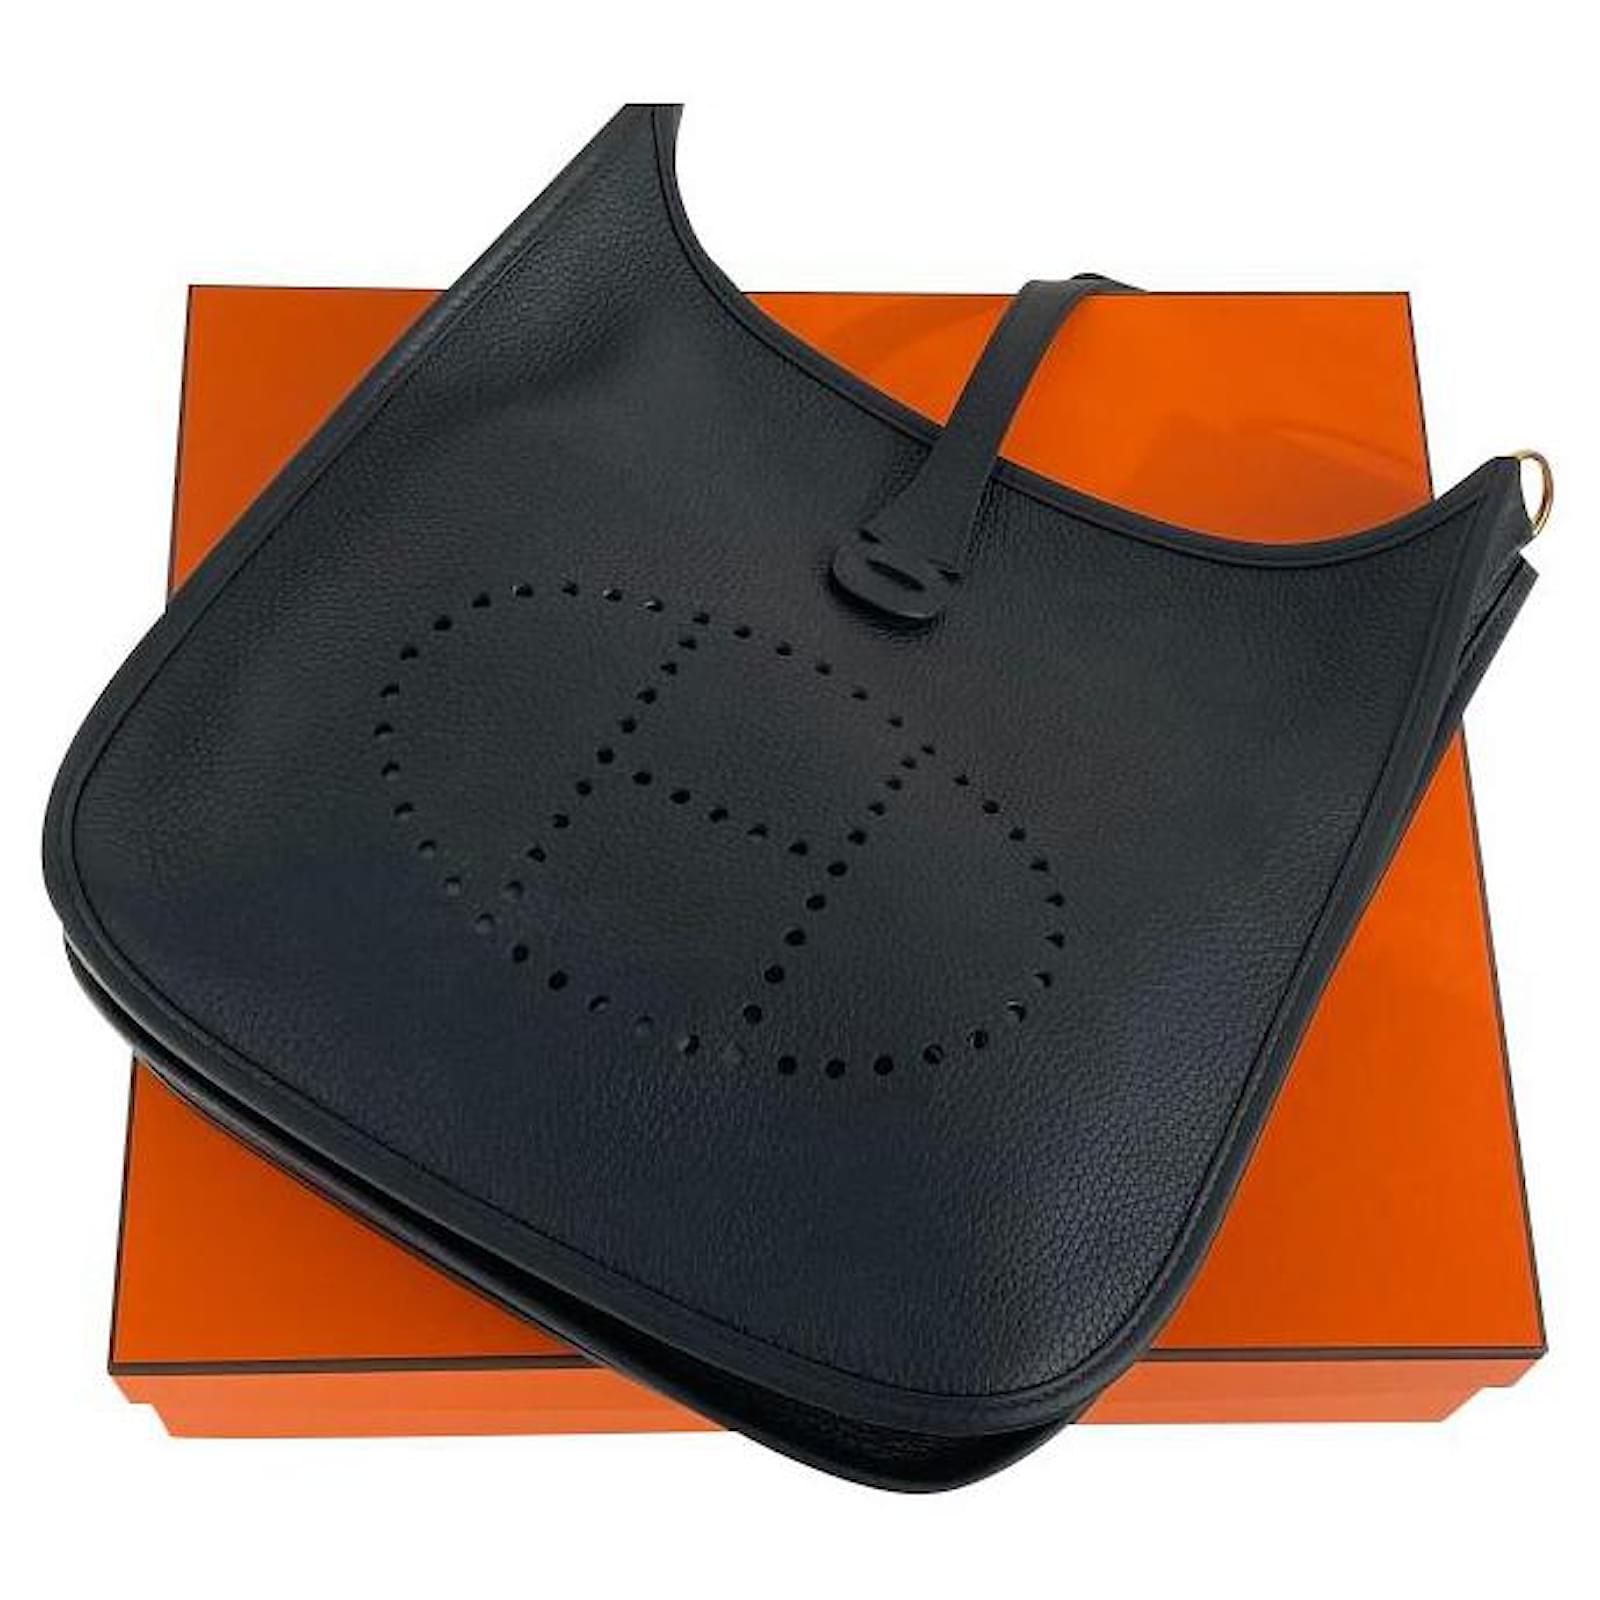 Evelyne 29 bag in orange leather